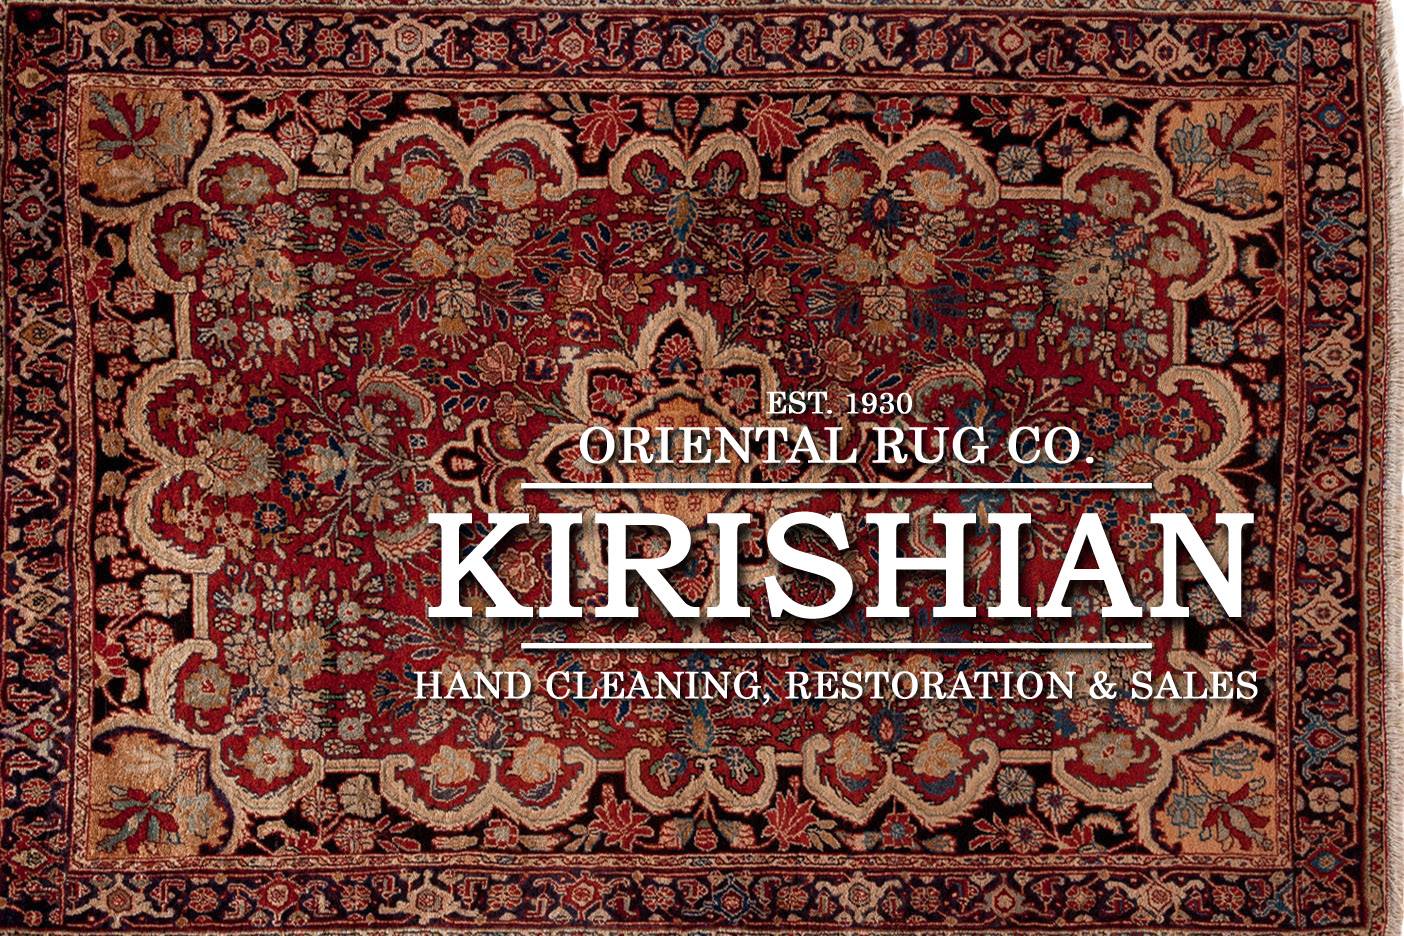 Kirishian Oriental Rug Company